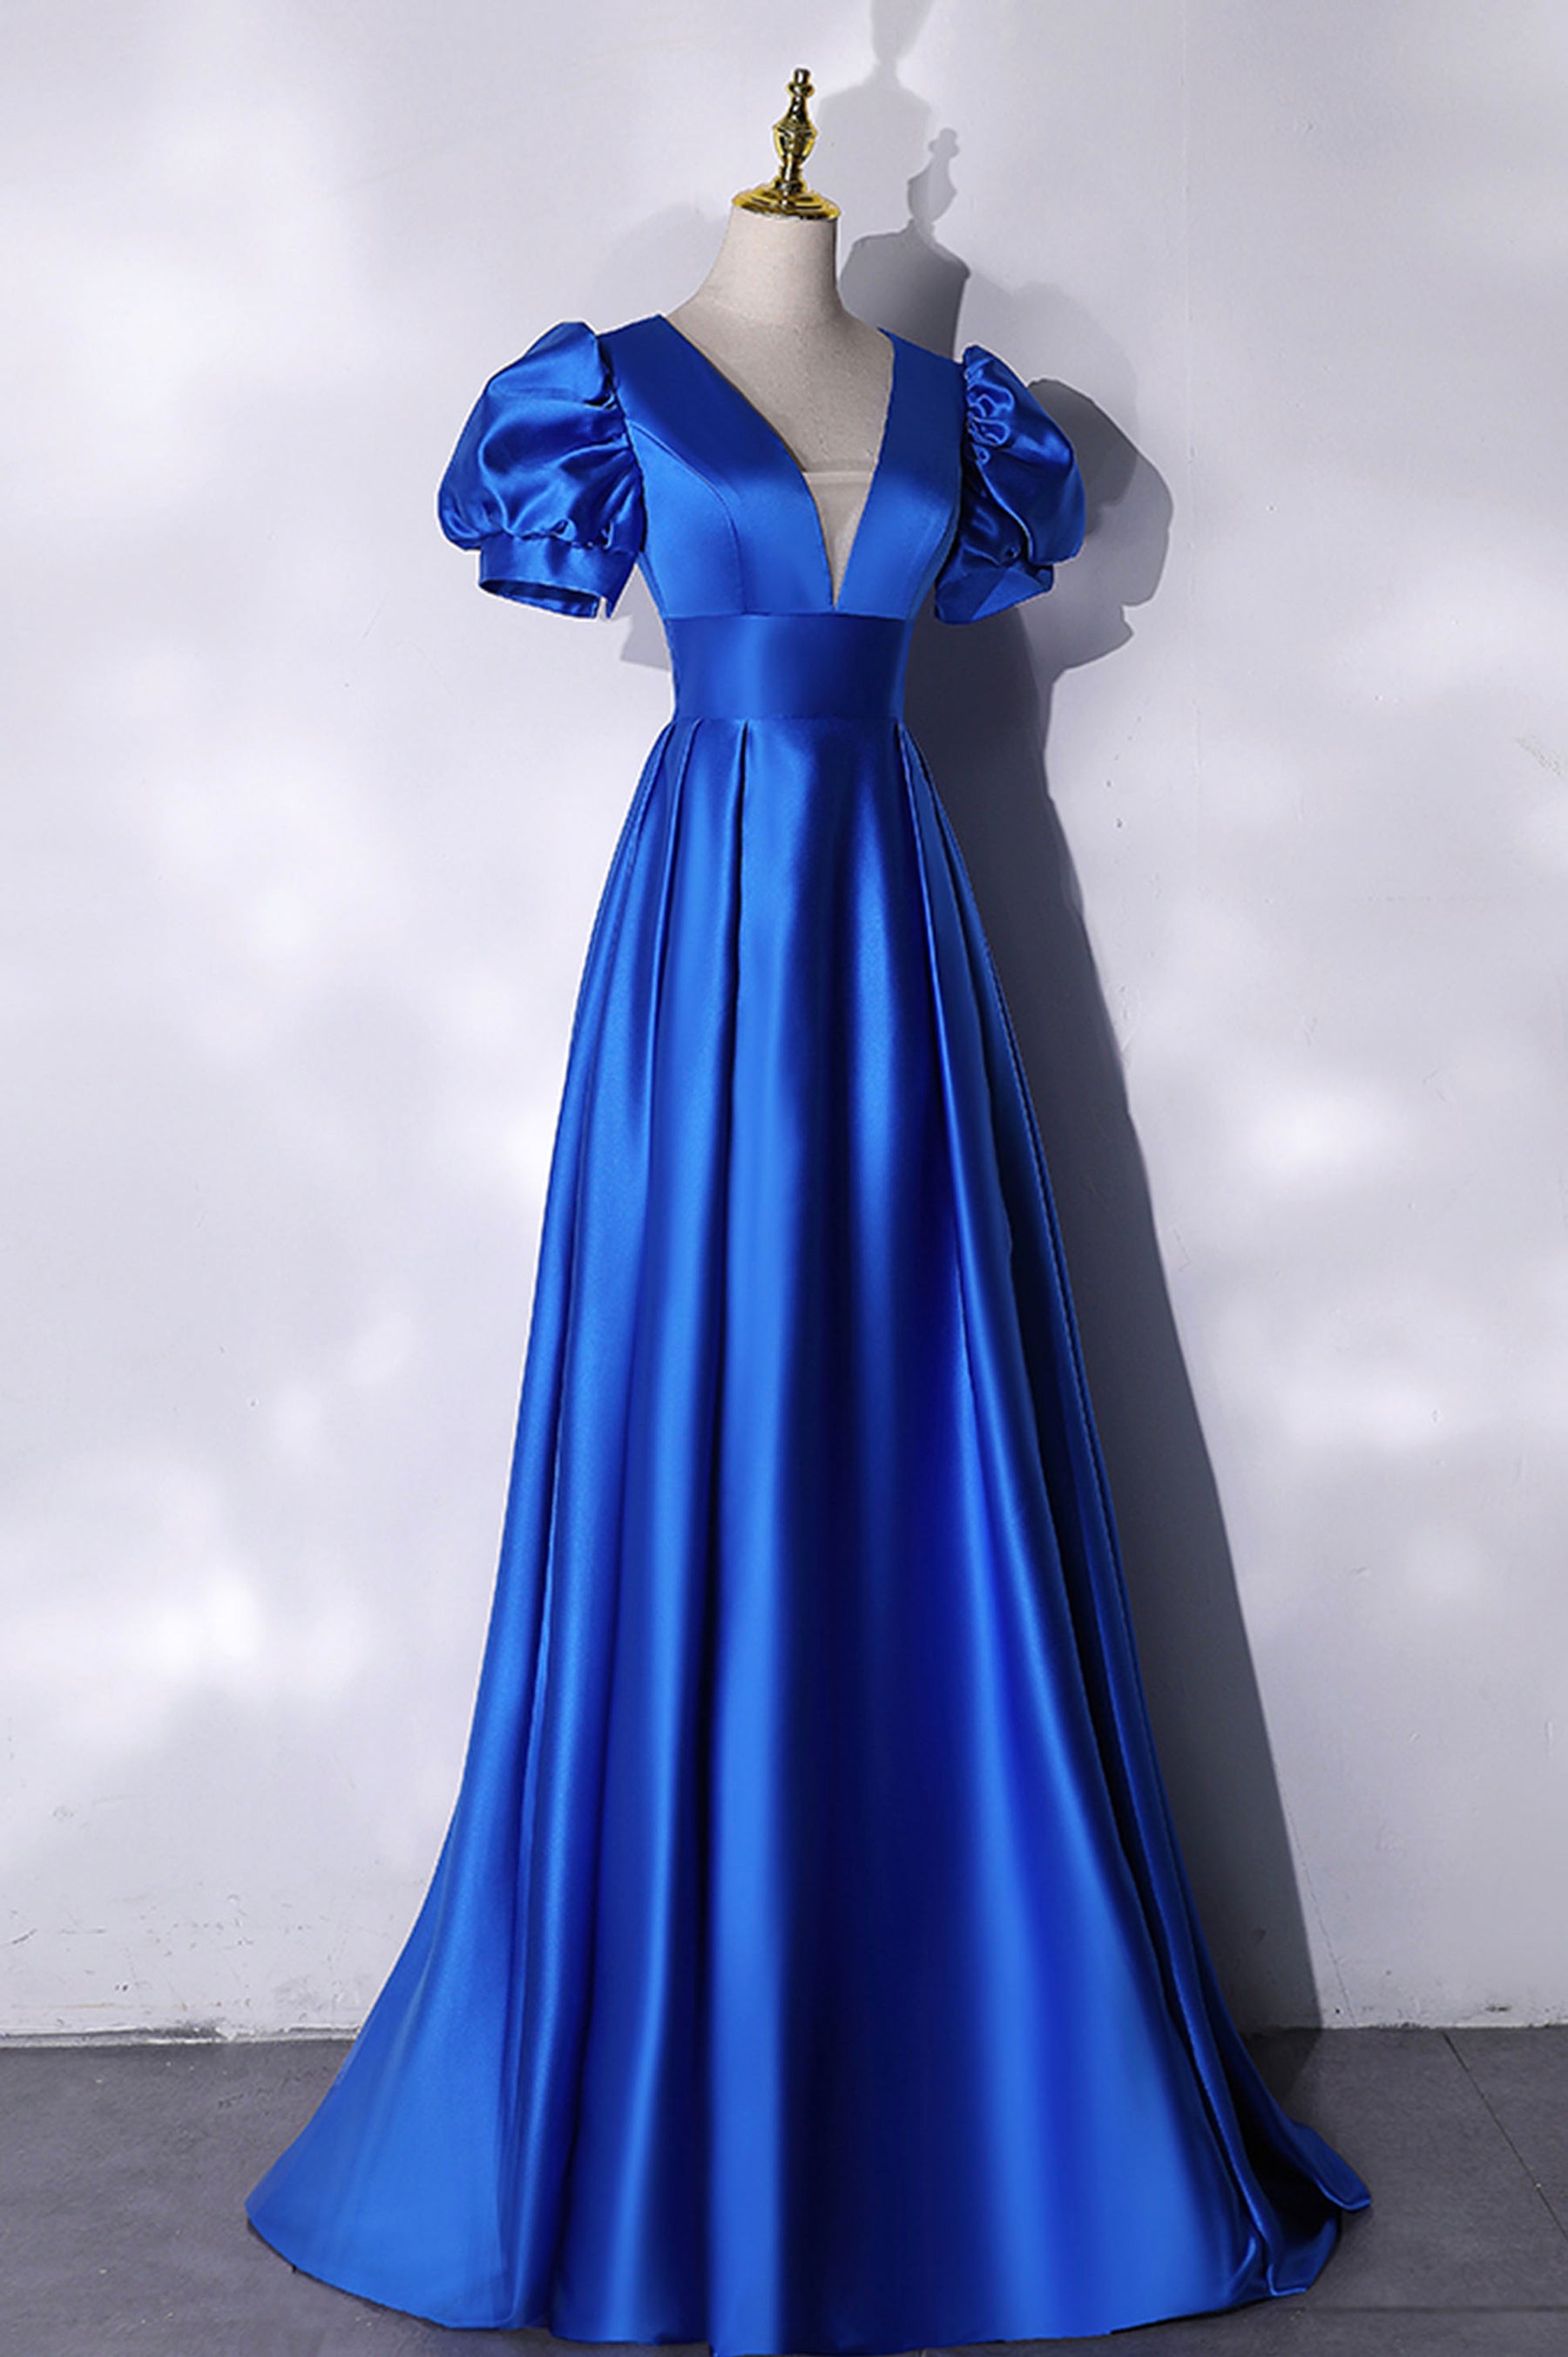 Blue V-Neck Satin Long Prom Dress, Simple Blue Evening Party Dress